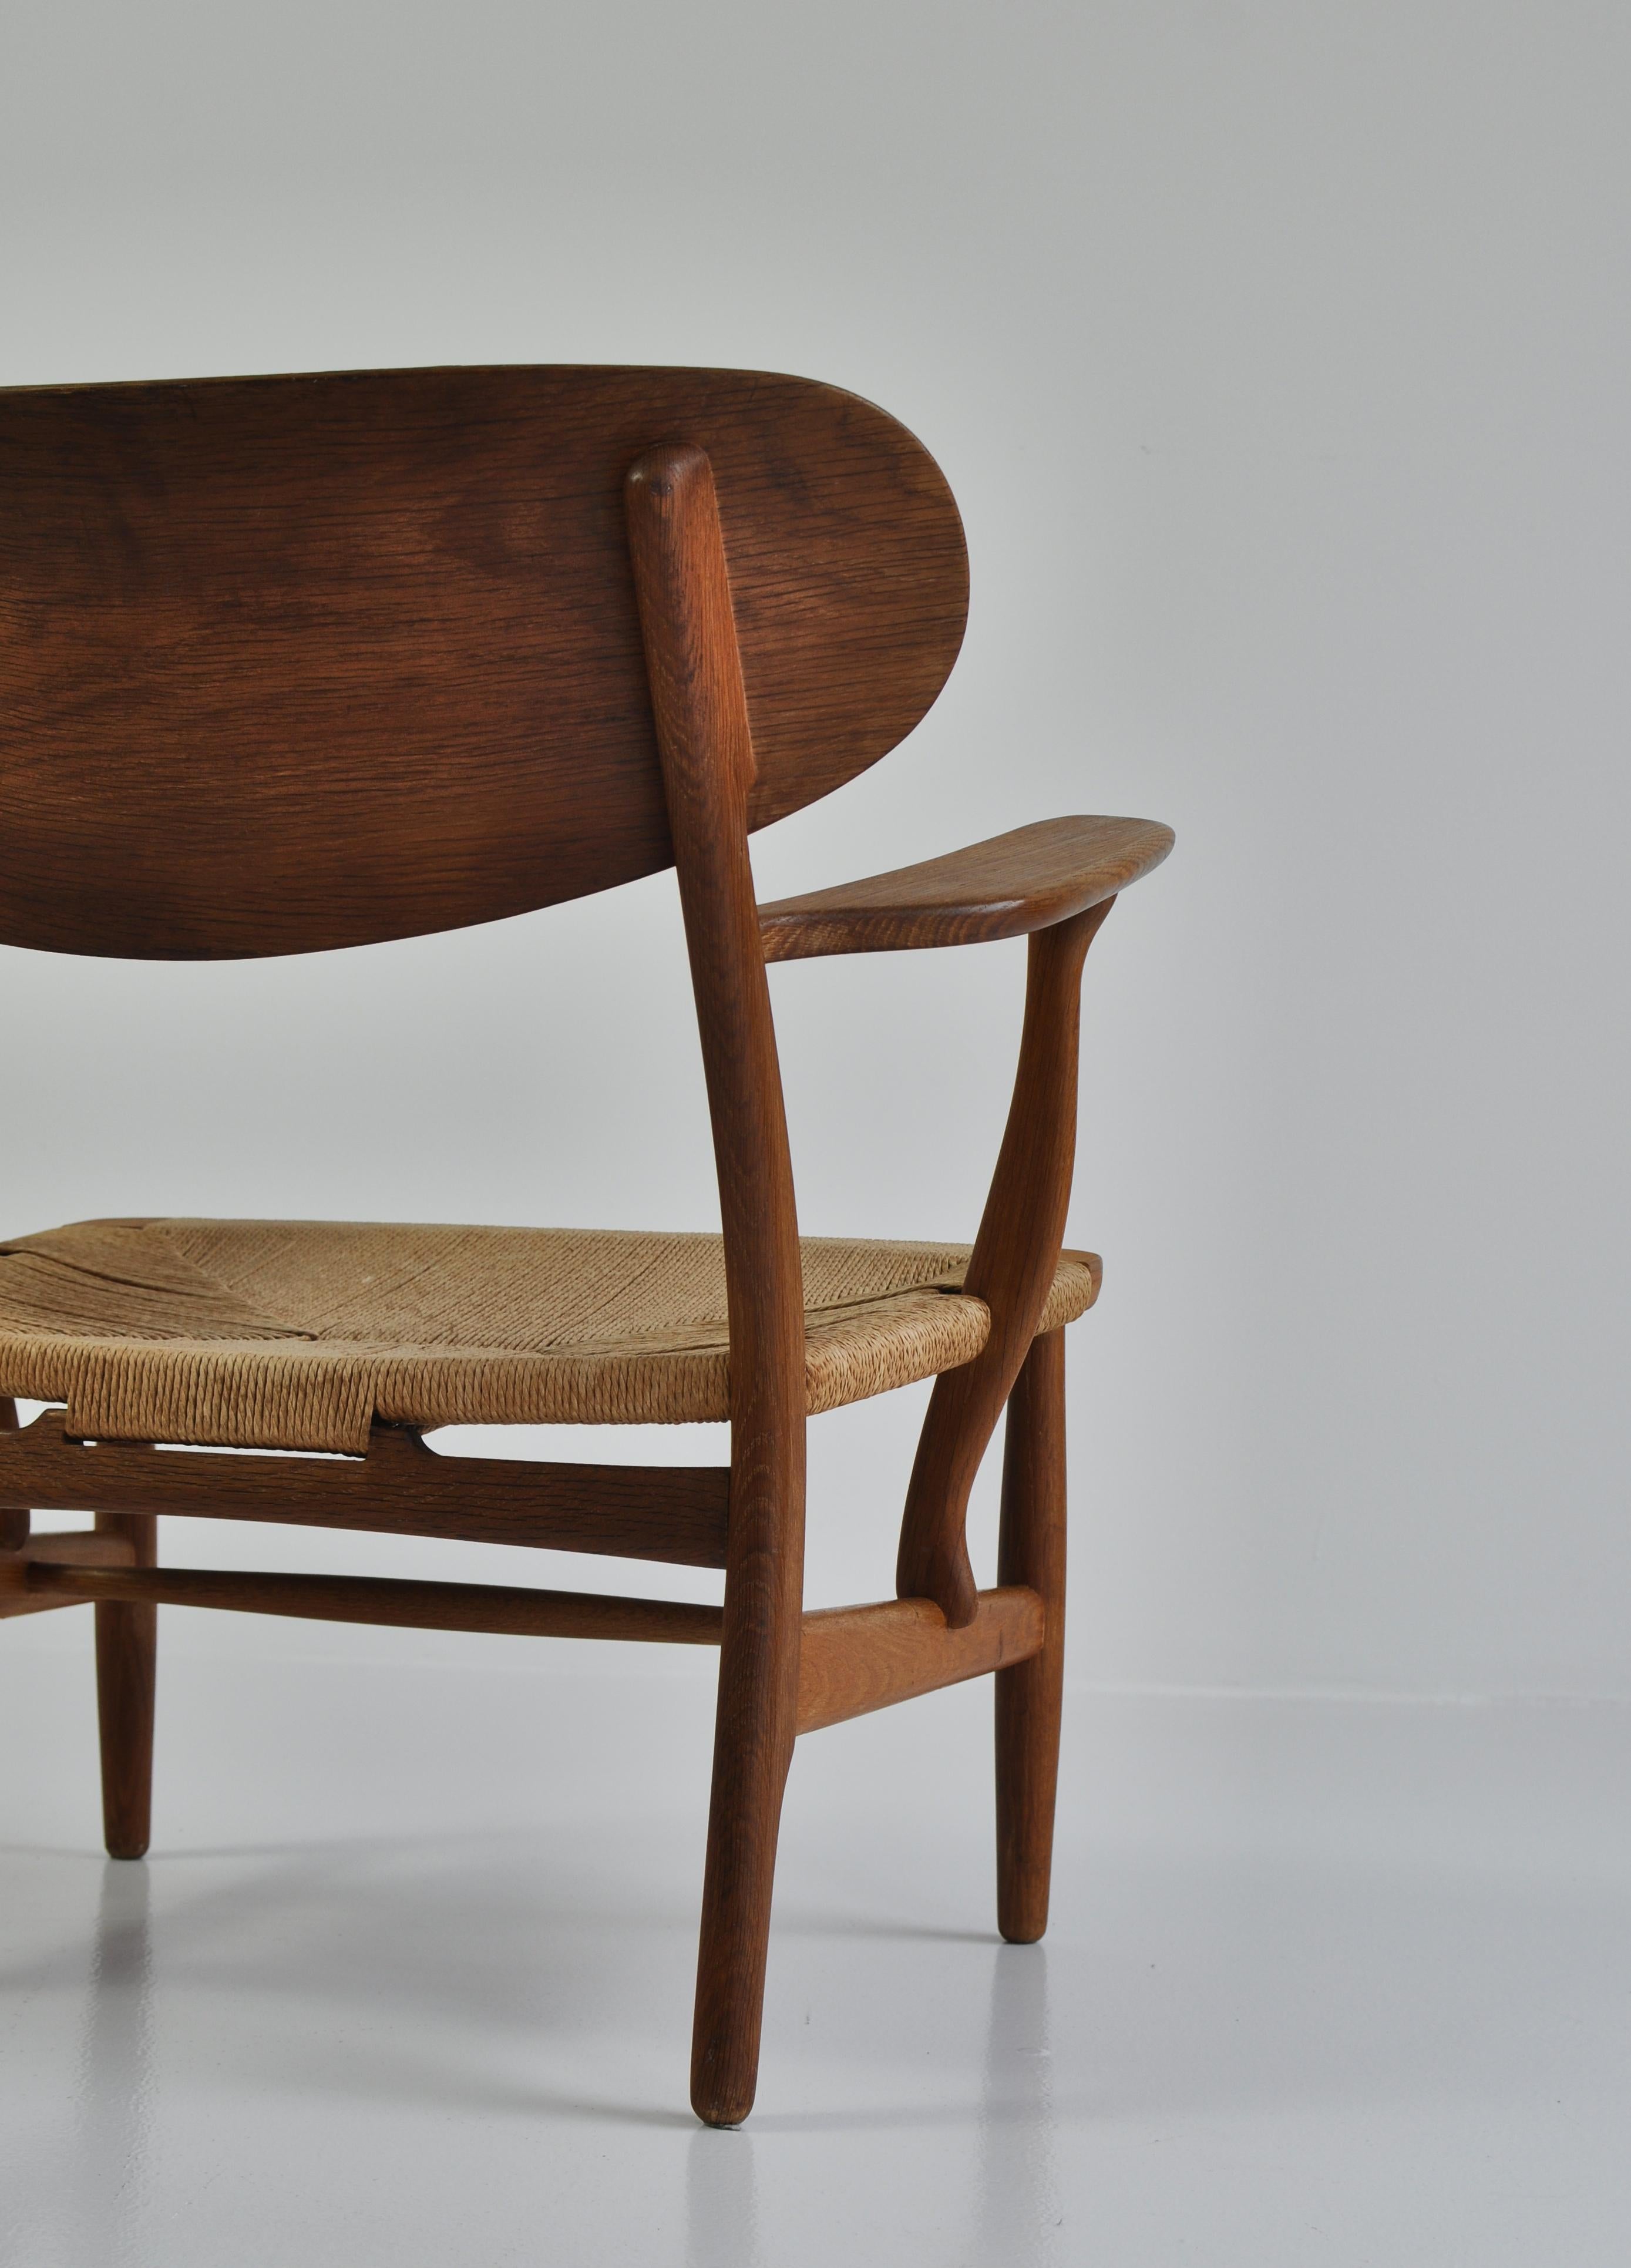 Hans J. Wegner Early Production Danish Modern Chair Model CH22